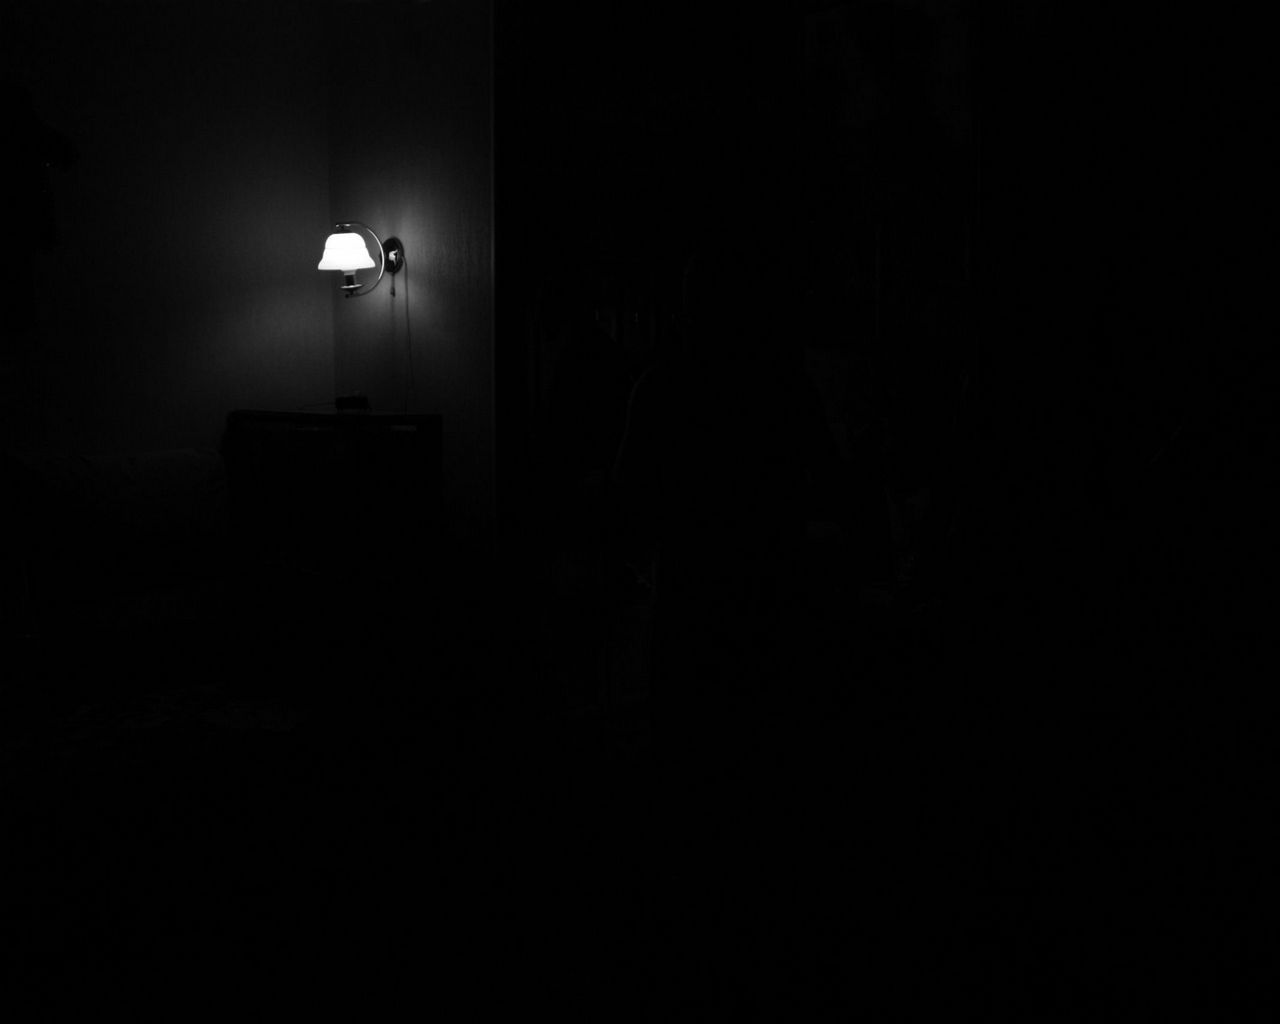 Продолжить темнота. Комната в темноте. Свет в темноте. Свет в темной комнате. Темная комната без света.